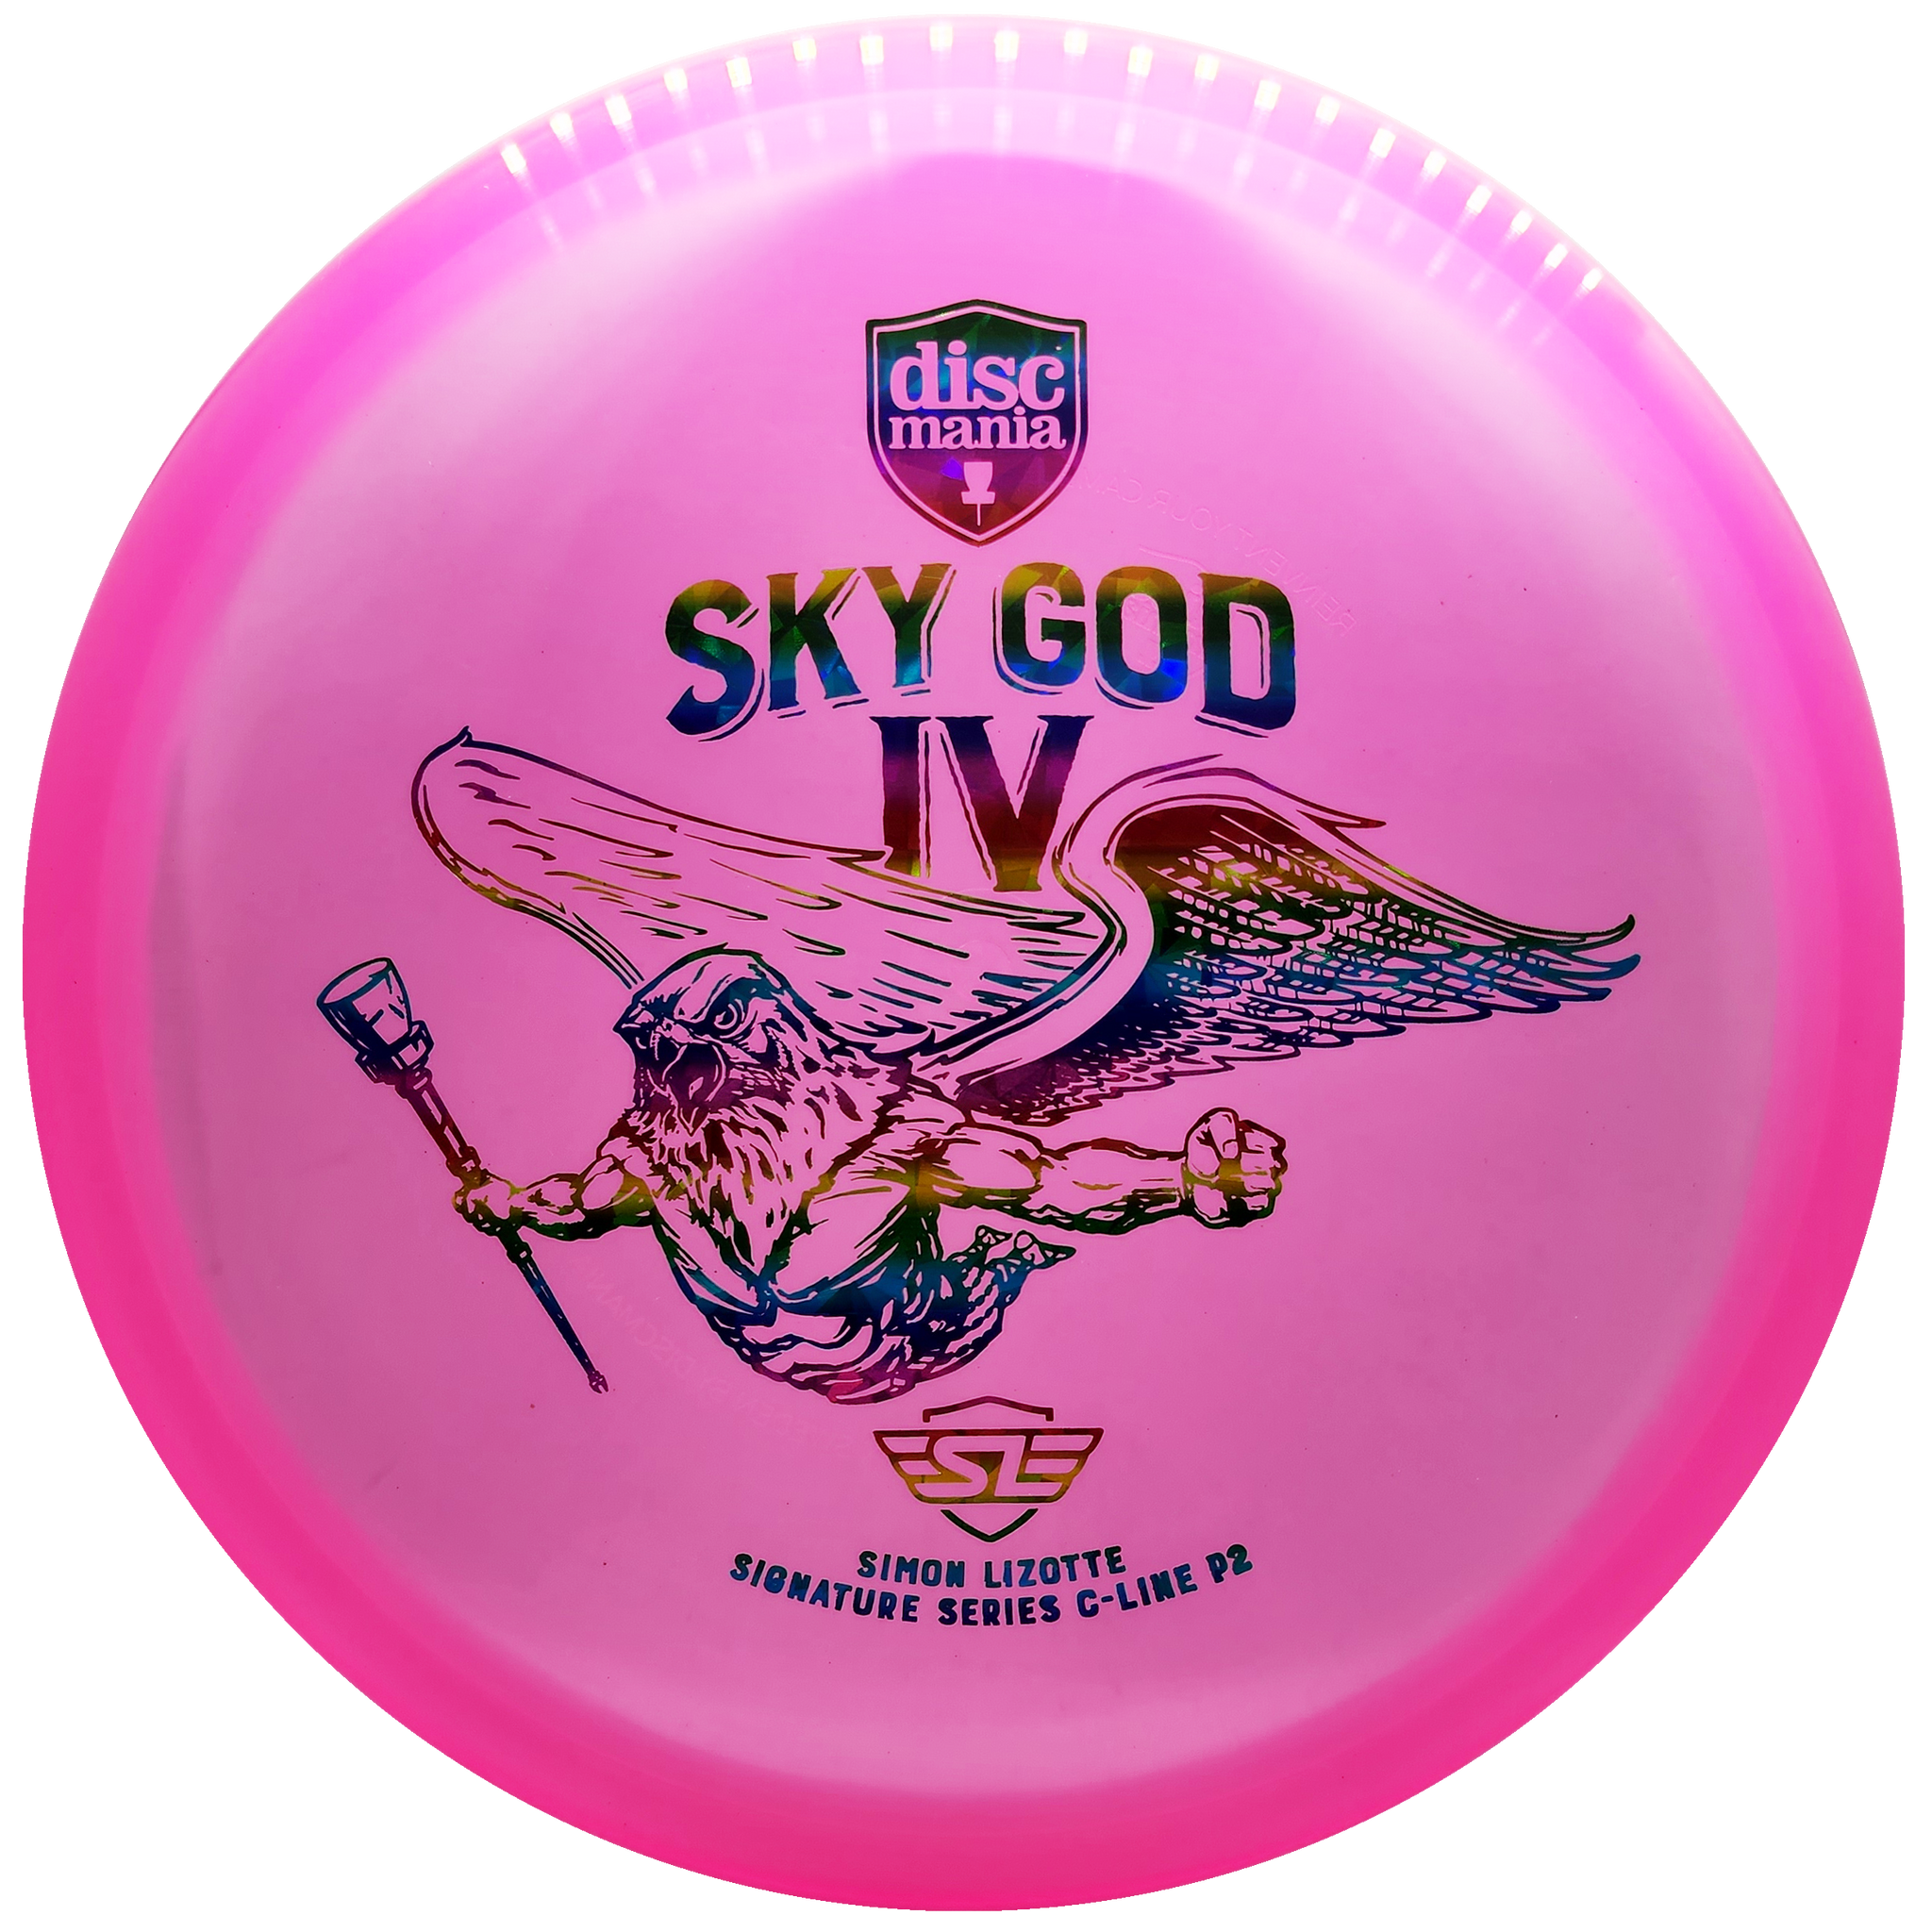 Discmania: Sky God 4 - Simon Lizotte Signature Series C-Line P2 - Pink/Rainbow